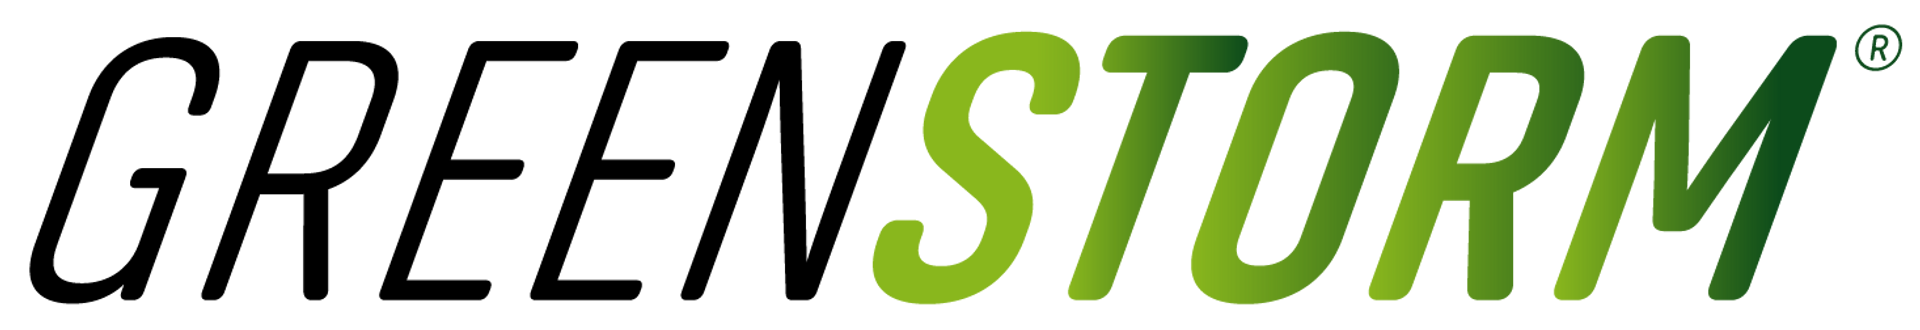 Greenstorm Logo